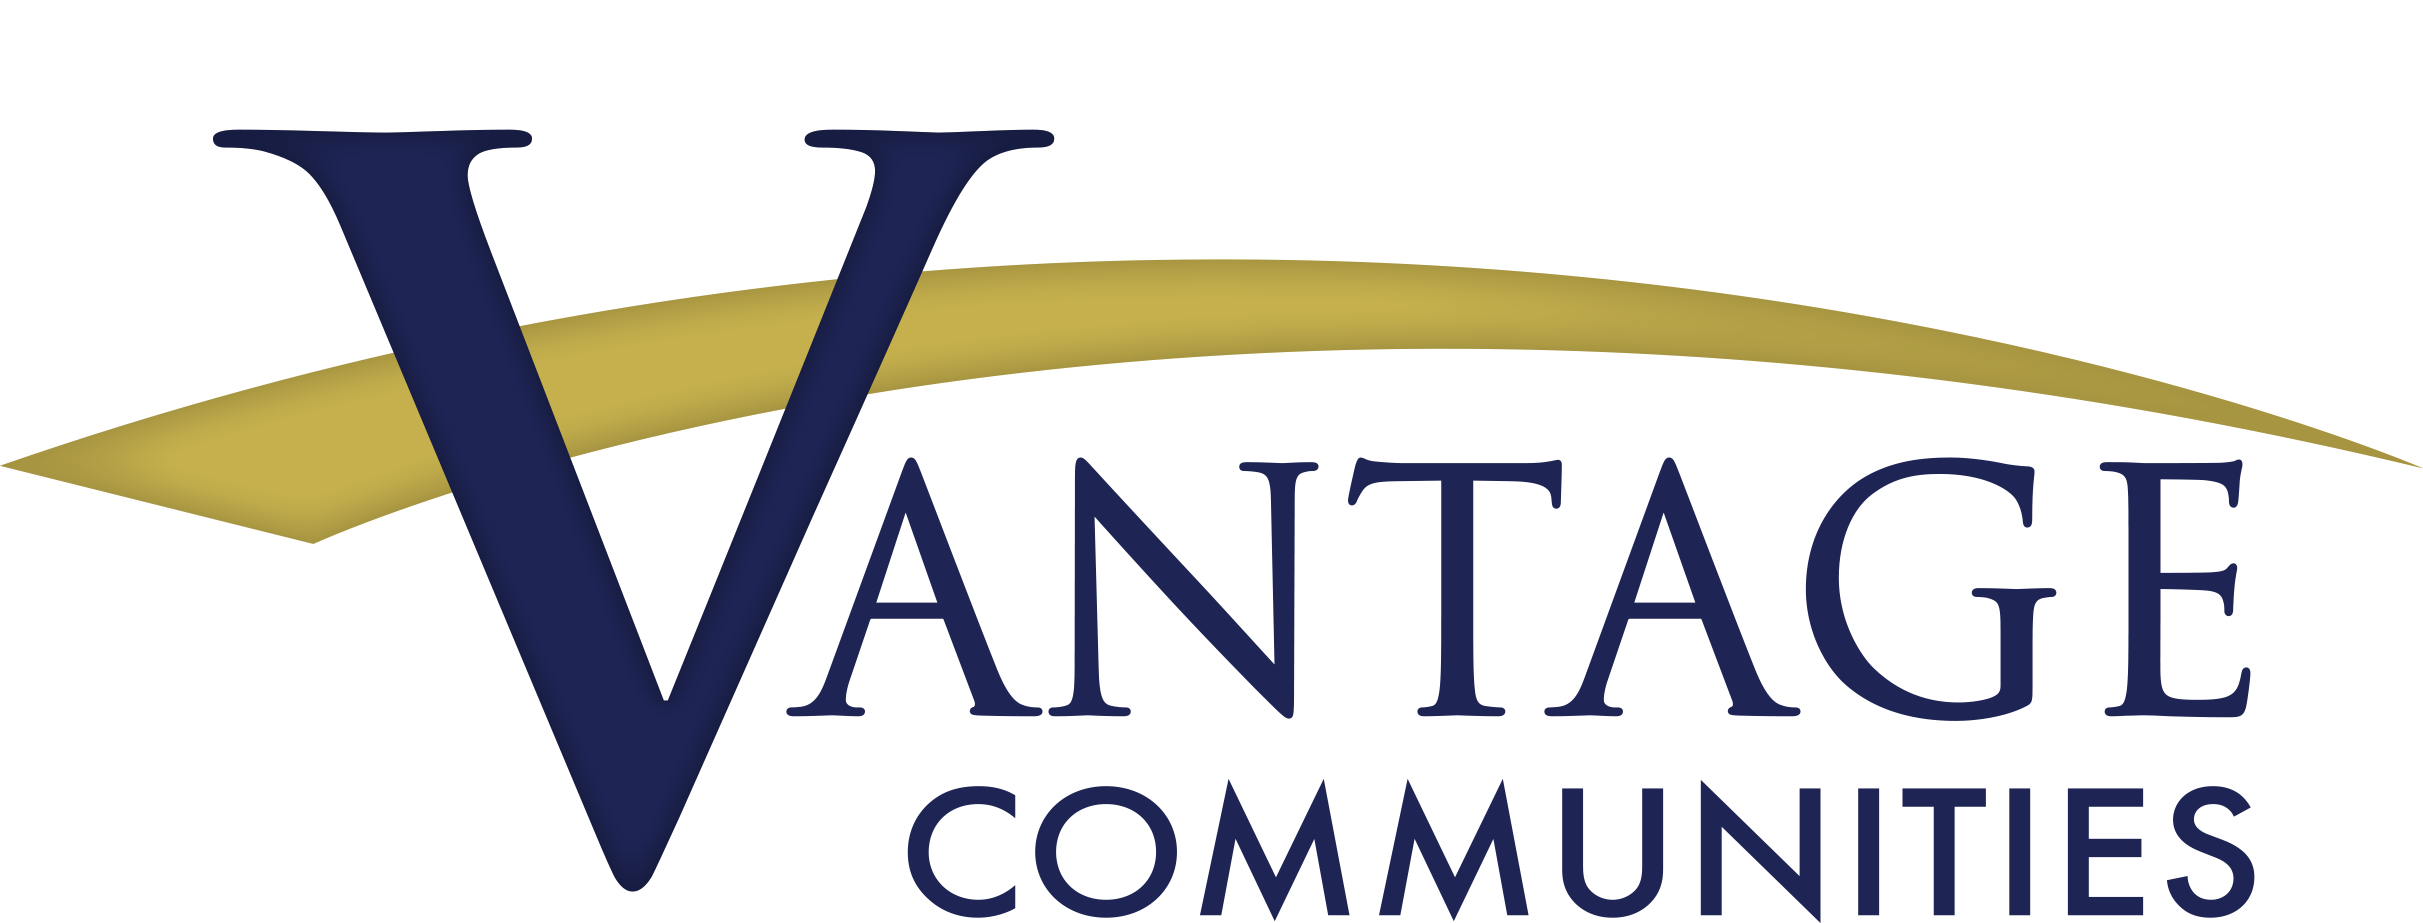 Vantage Communities